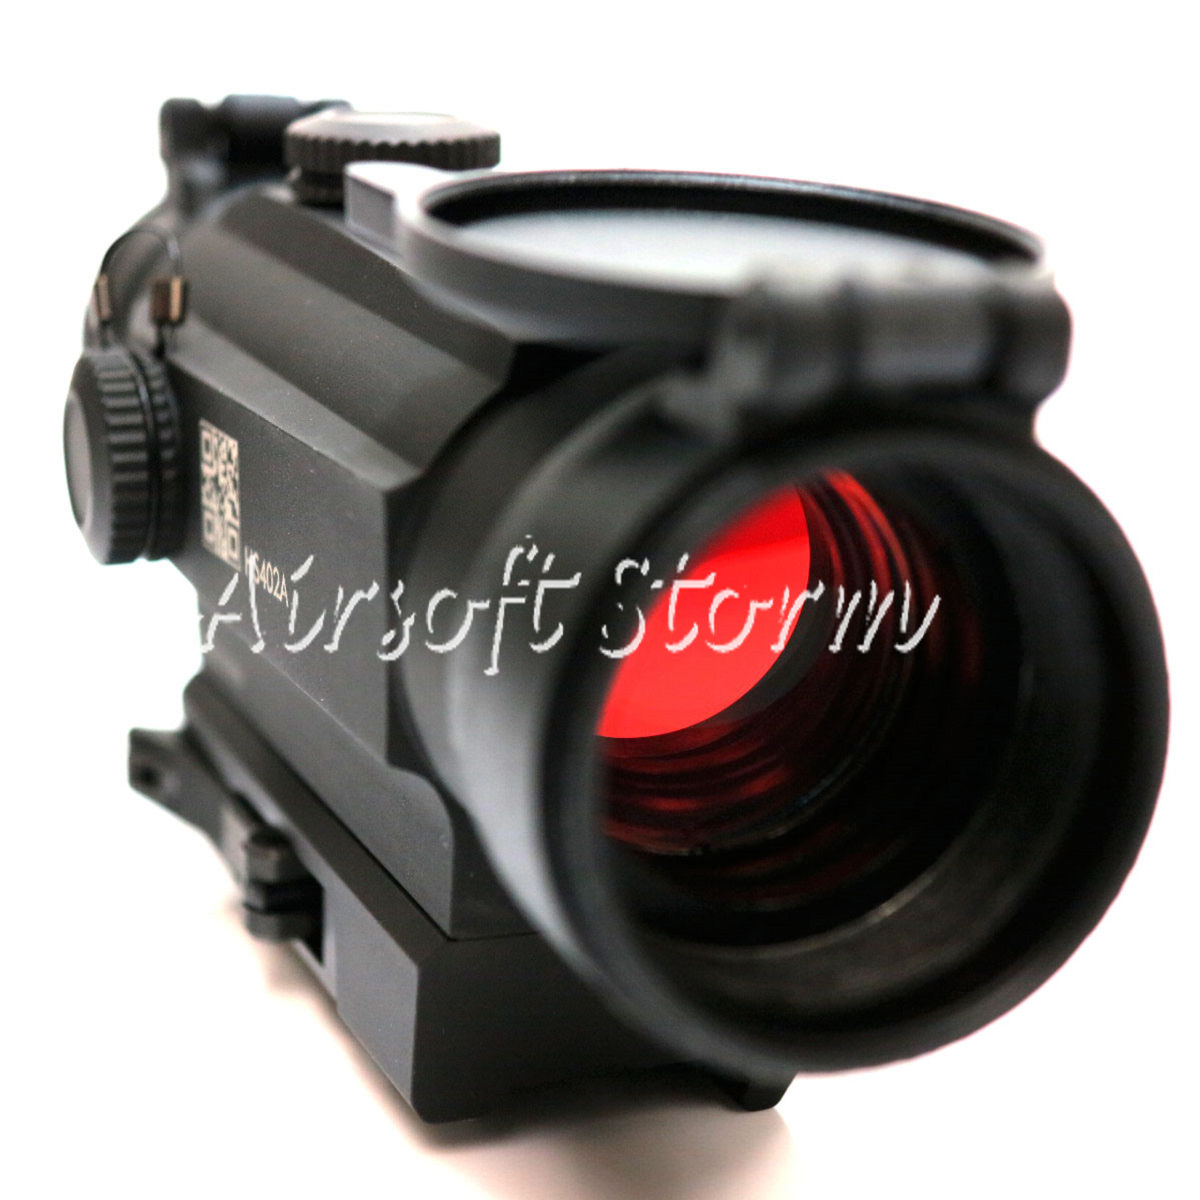 SWAT Gear Tactical Holosun HS402A 1x30 Red Dot Sight Scope